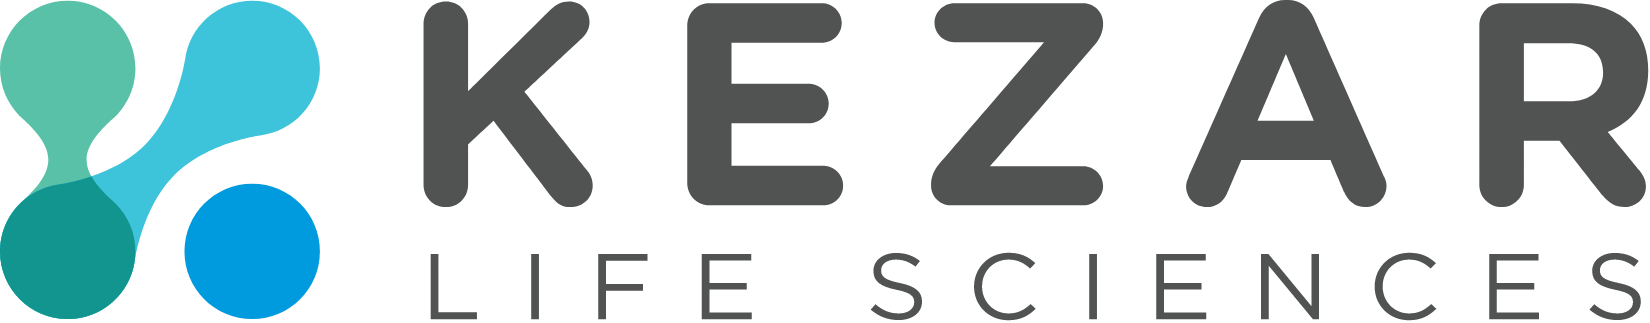 Kezar Life Sciences logo large (transparent PNG)